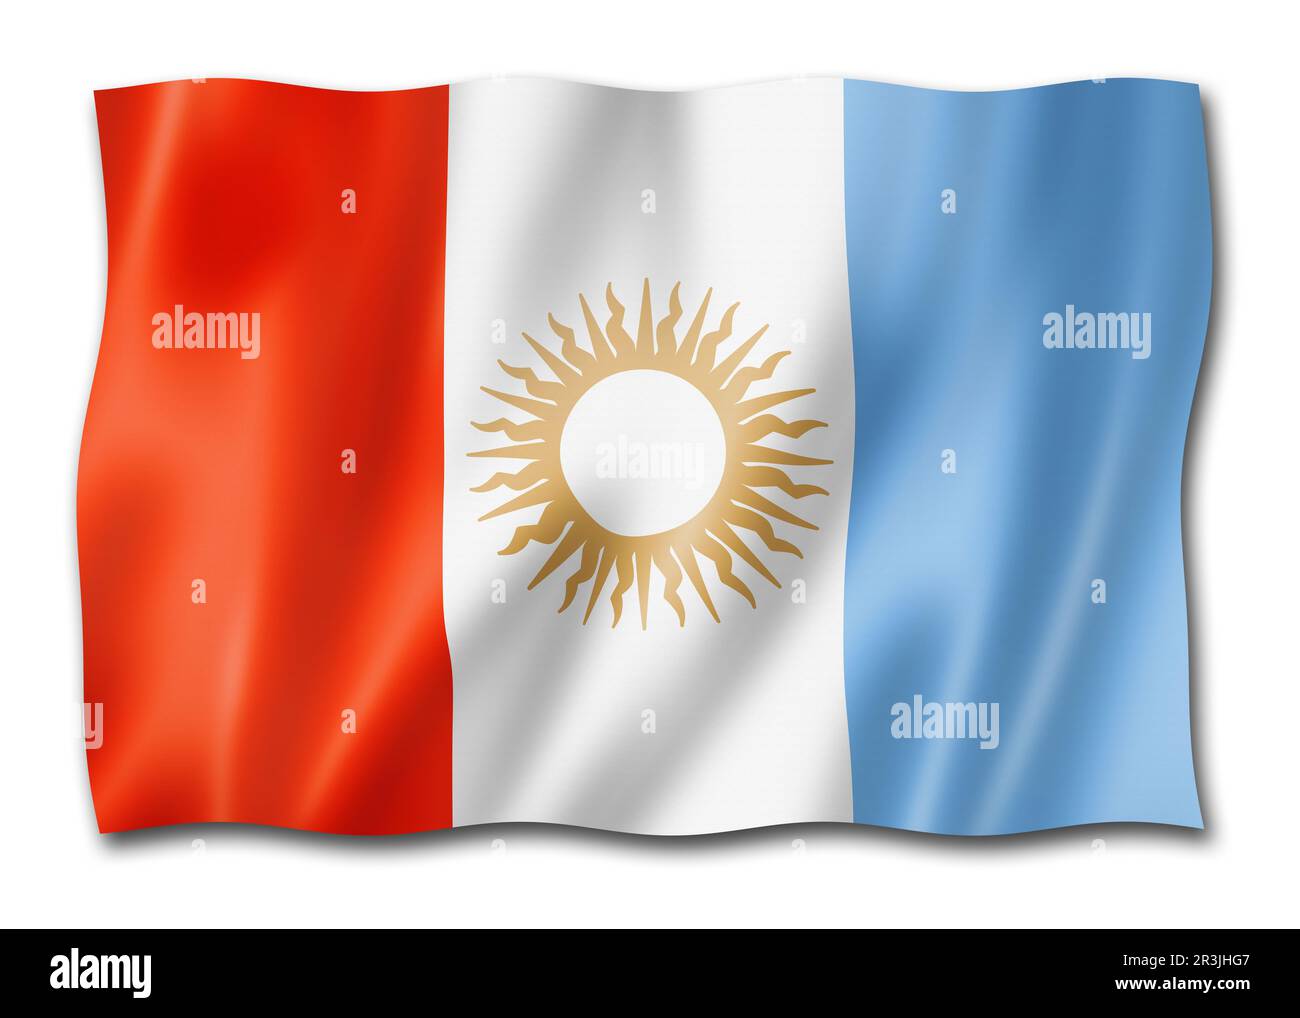 Cordoba province flag, Argentina waving banner collection. 3D illustration Stock Photo